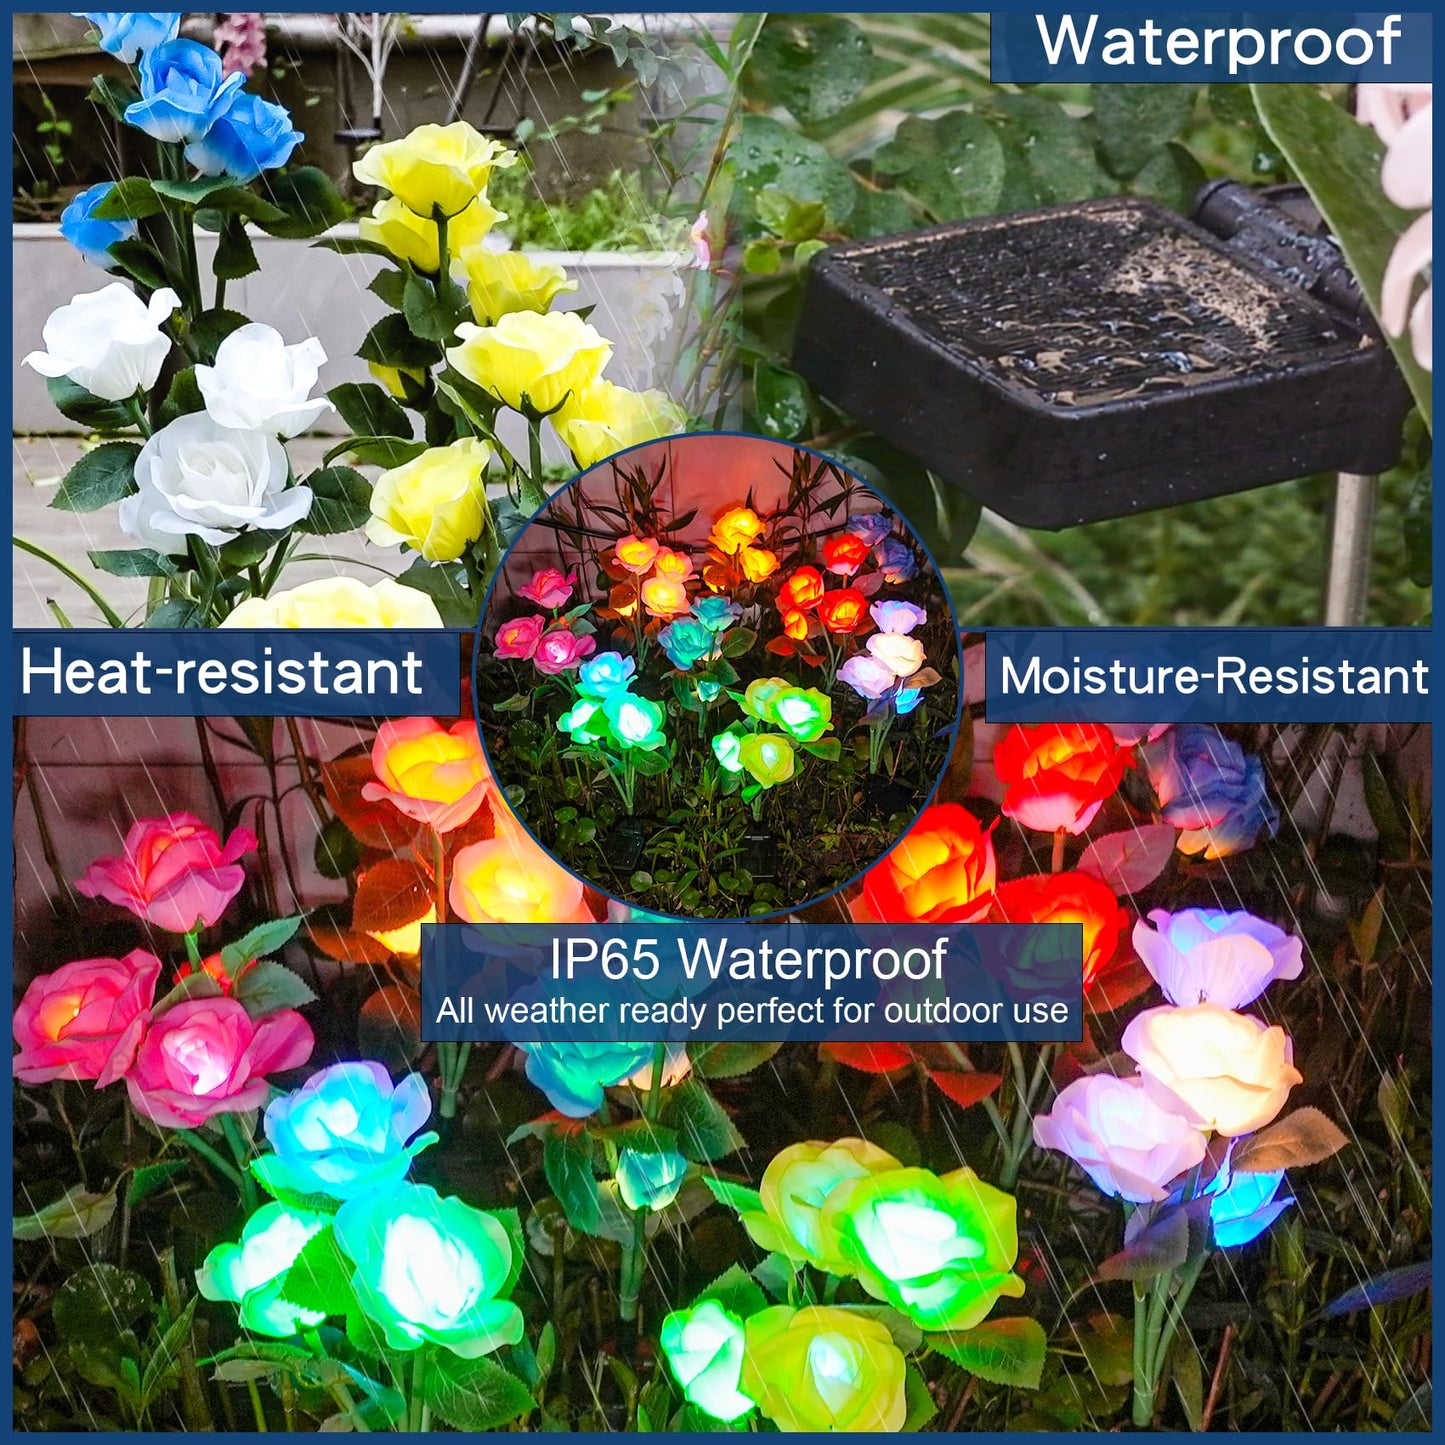 TONULAX Solar Garden Lights - Newest Version Solar Lights Outdoor, 7-Color Changing Rose Lights for Yard, Decoration, Enlarged Solar Panel, More Realistic Rose Flower (2 Packs)